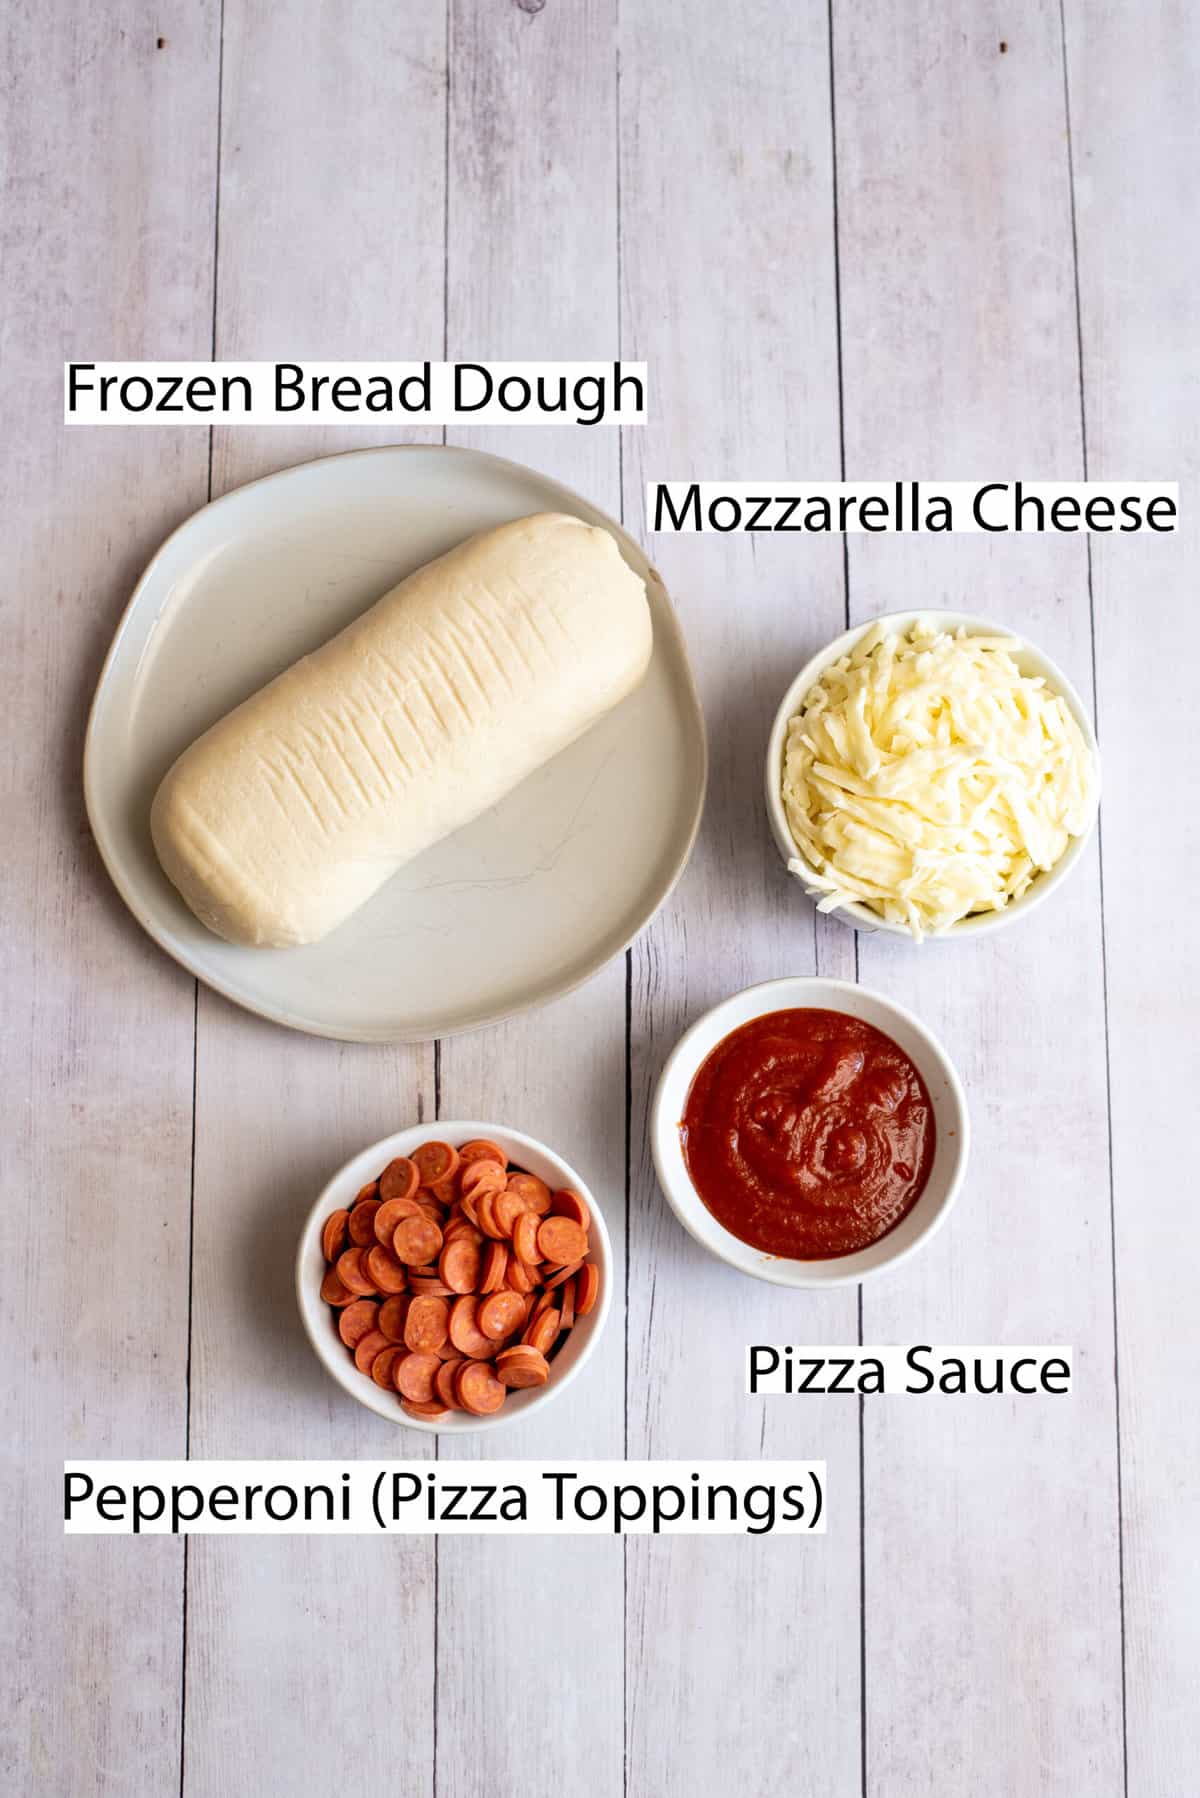 stuffed pizza sticks ingredients